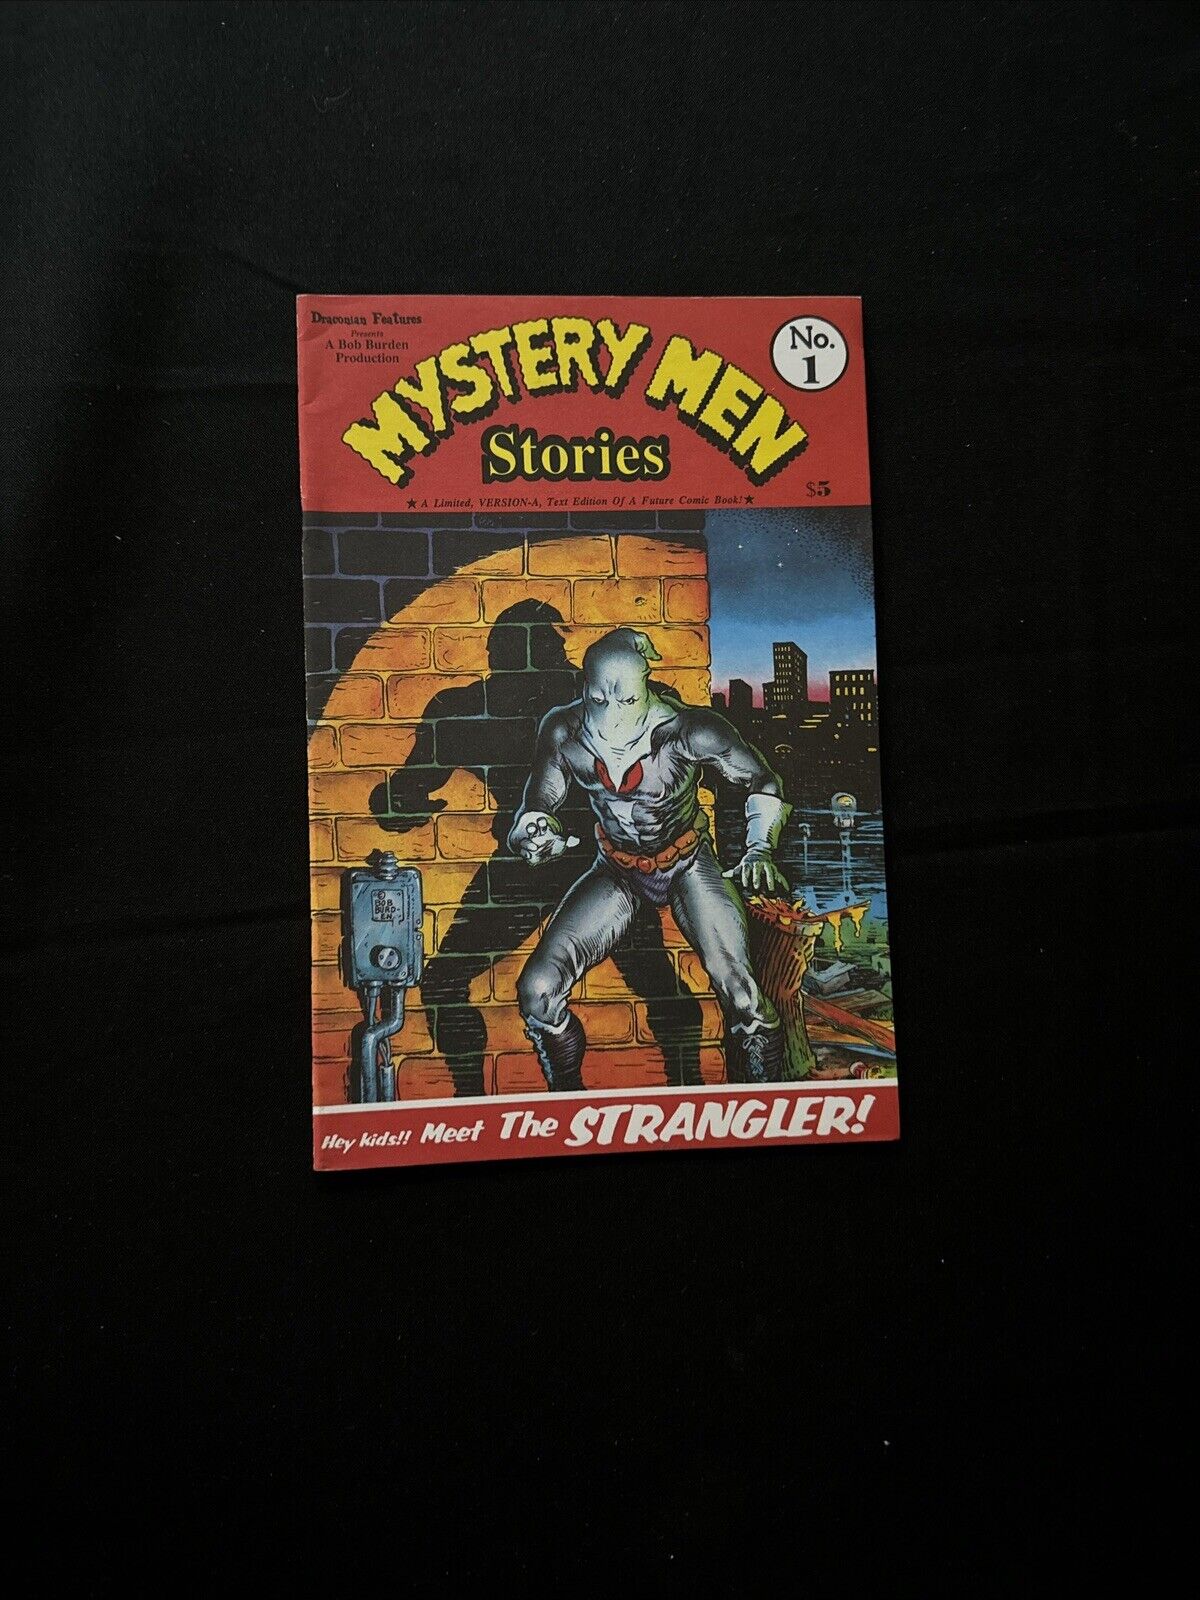 Mystery Men Stories  #1 (1996) Bob Burden Studios Limited Edition